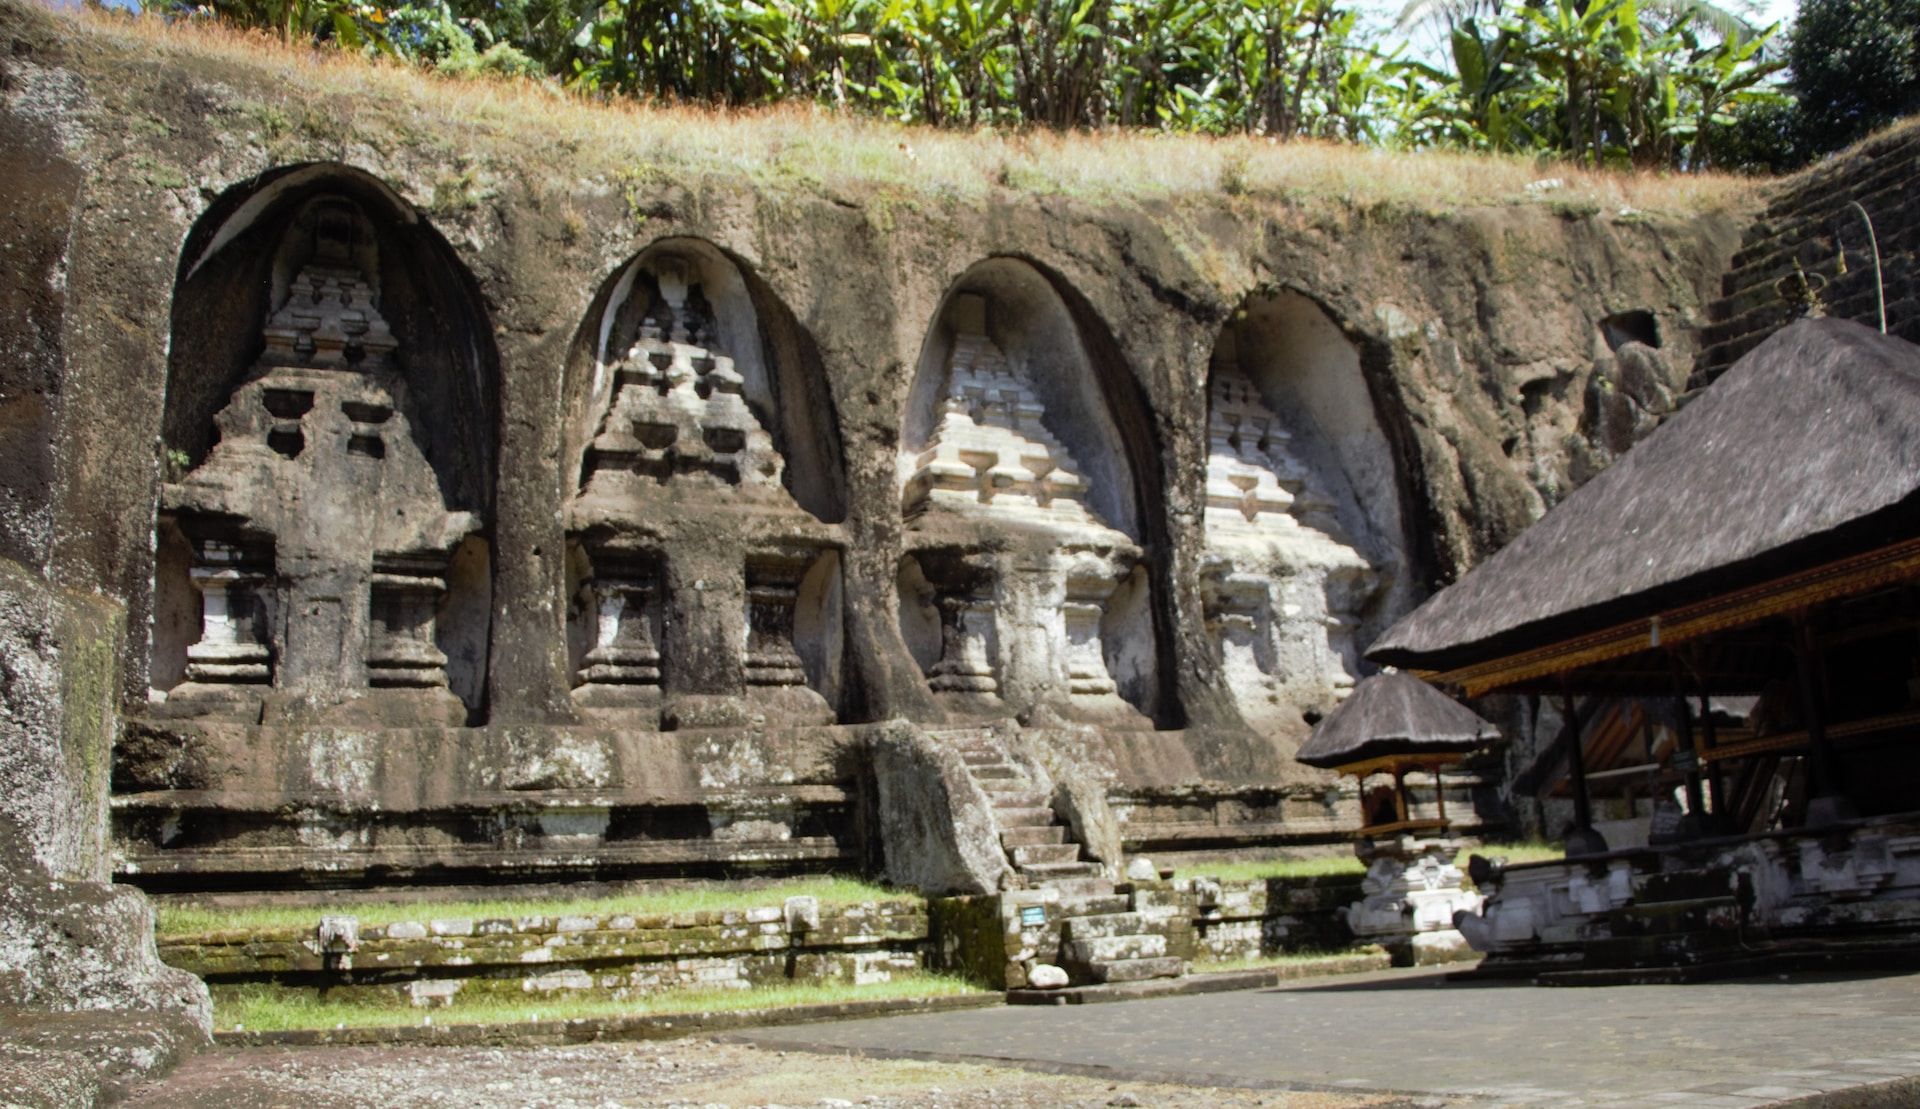 Gunung Kawi Temple Bali ancient sites